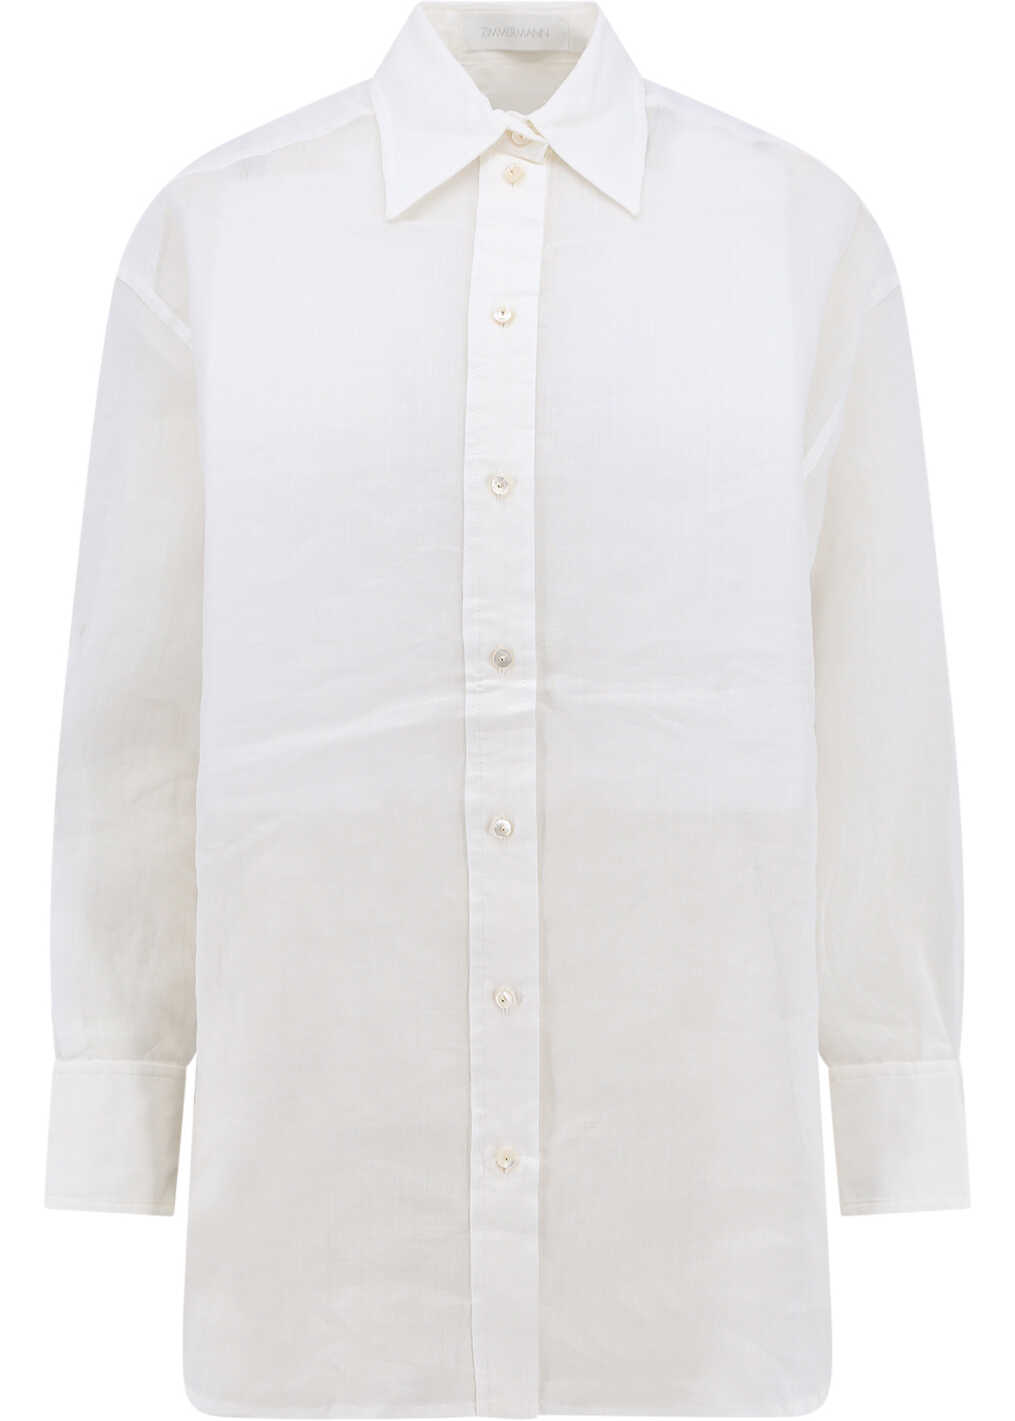 ZIMMERMANN Shirt White